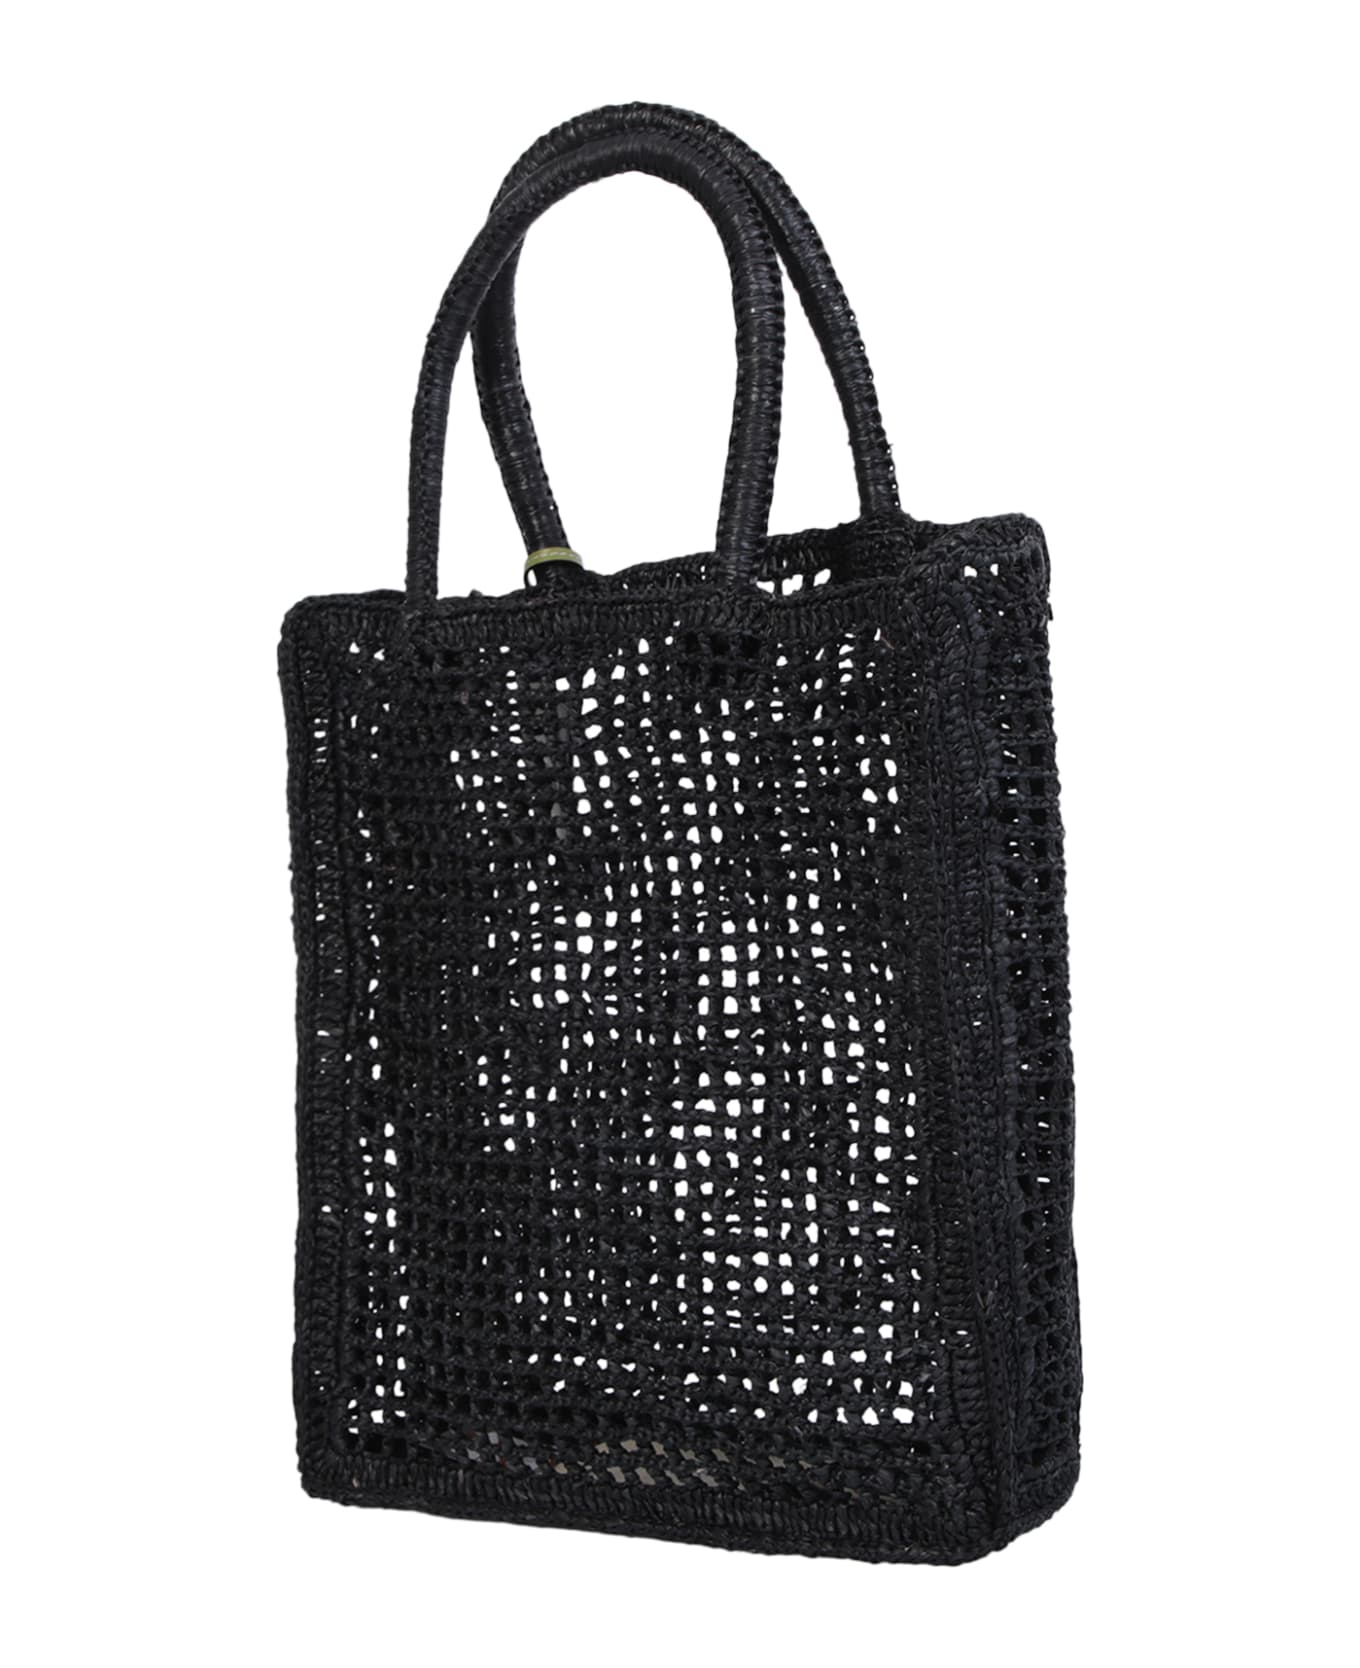 Manebi Woven Raffia Black Bag By Manebi - Black